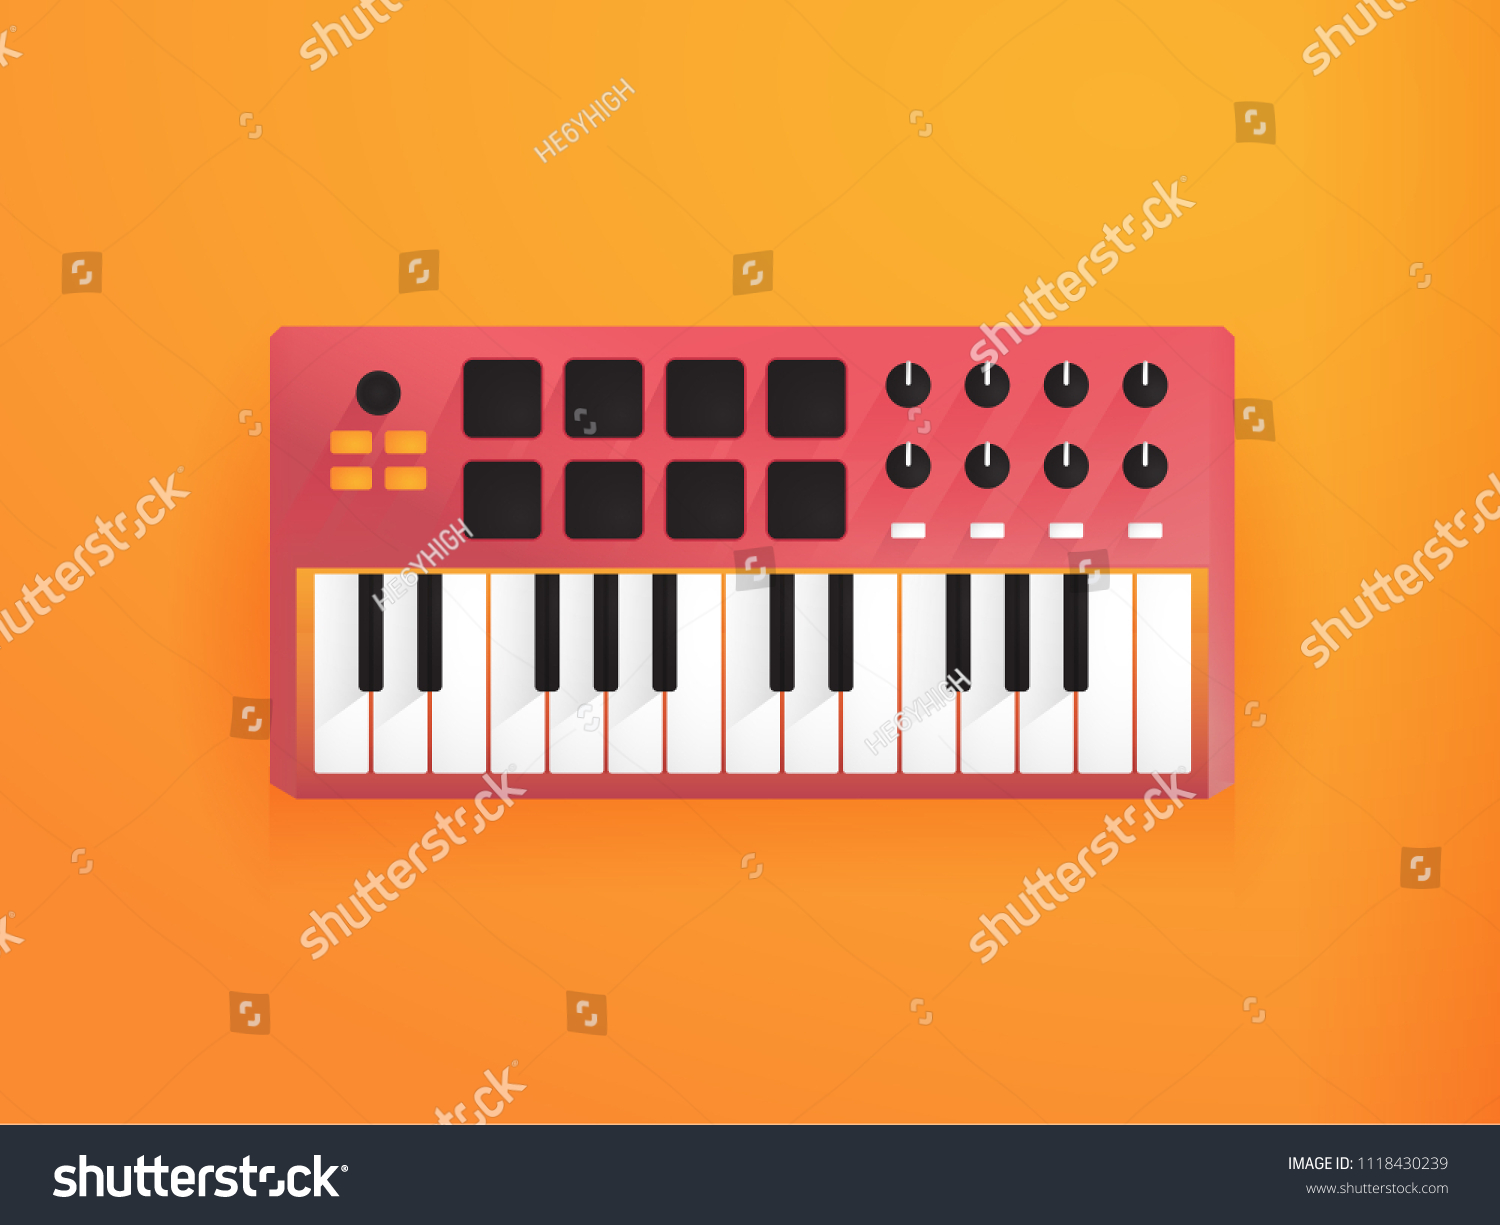 Midi Keyboard Piano Synthesizer Vector Stock Vector Royalty Free 1118430239